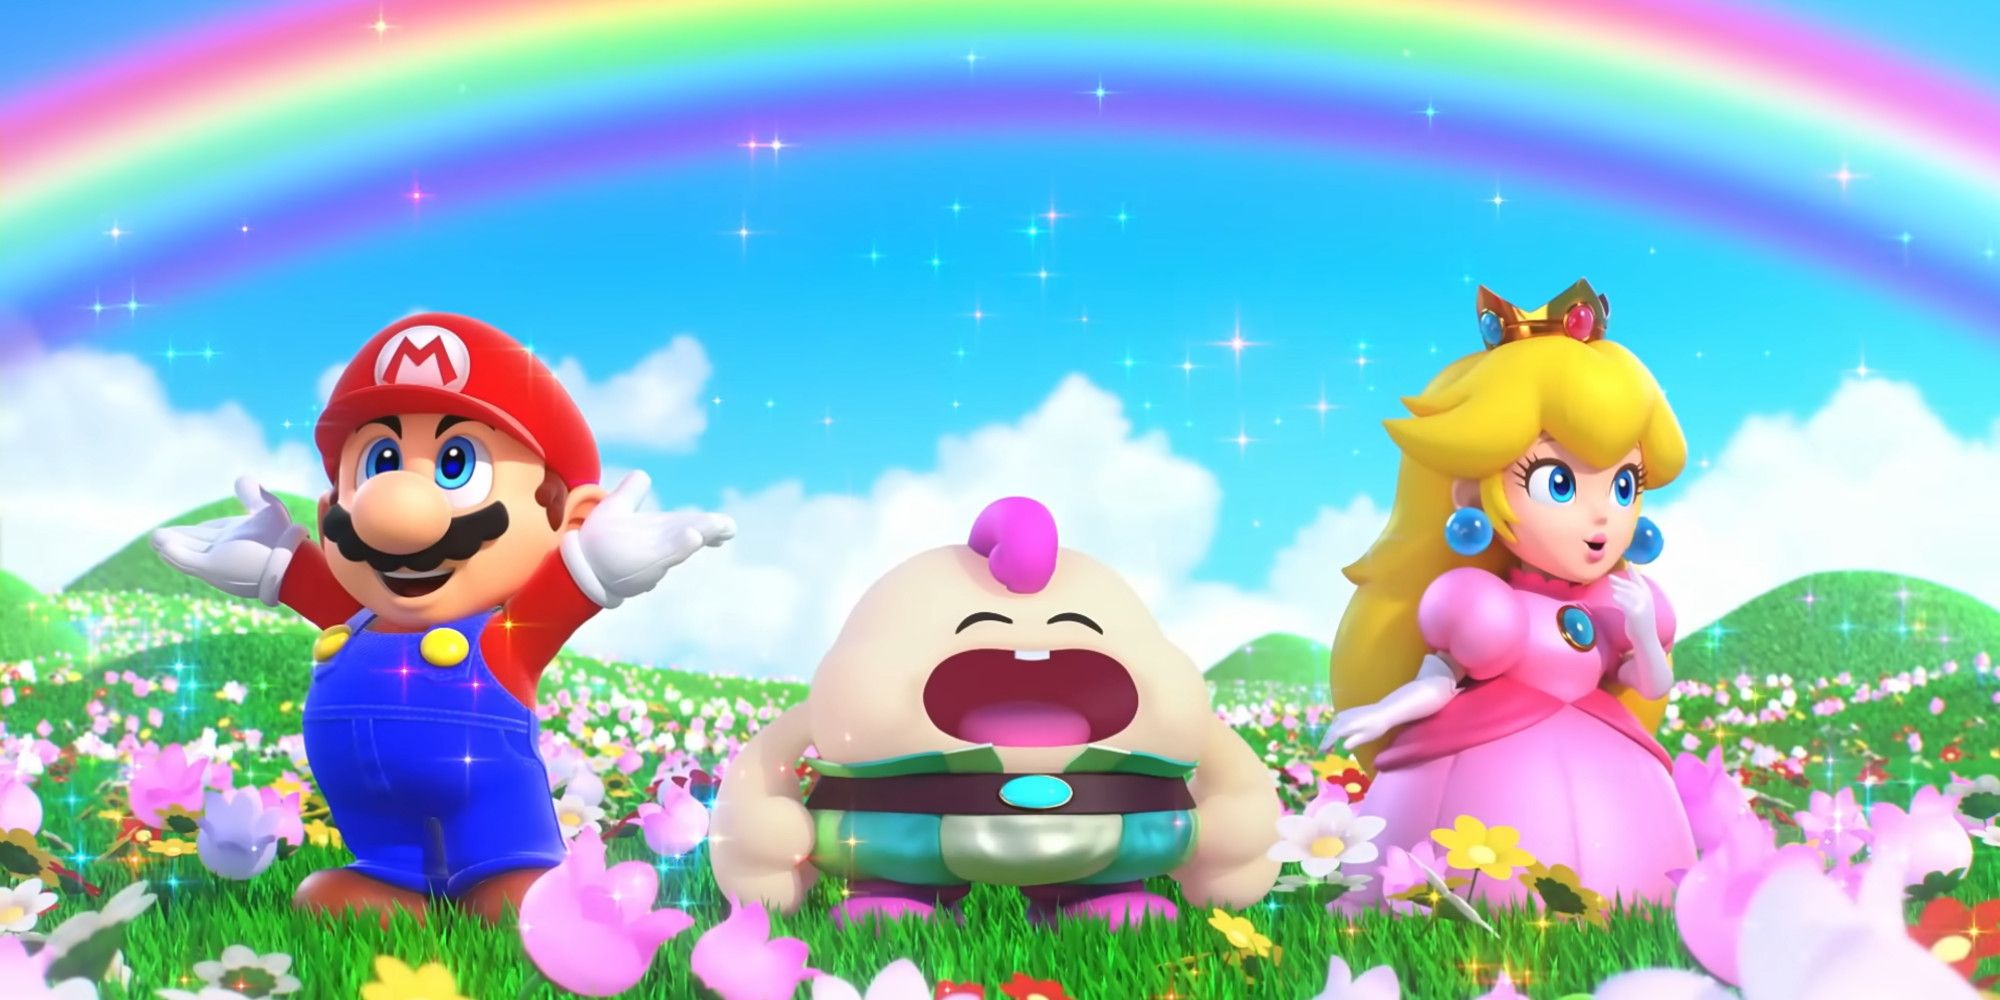 Mario, Mallow, and Princess Peach sat in a field under a rainbow